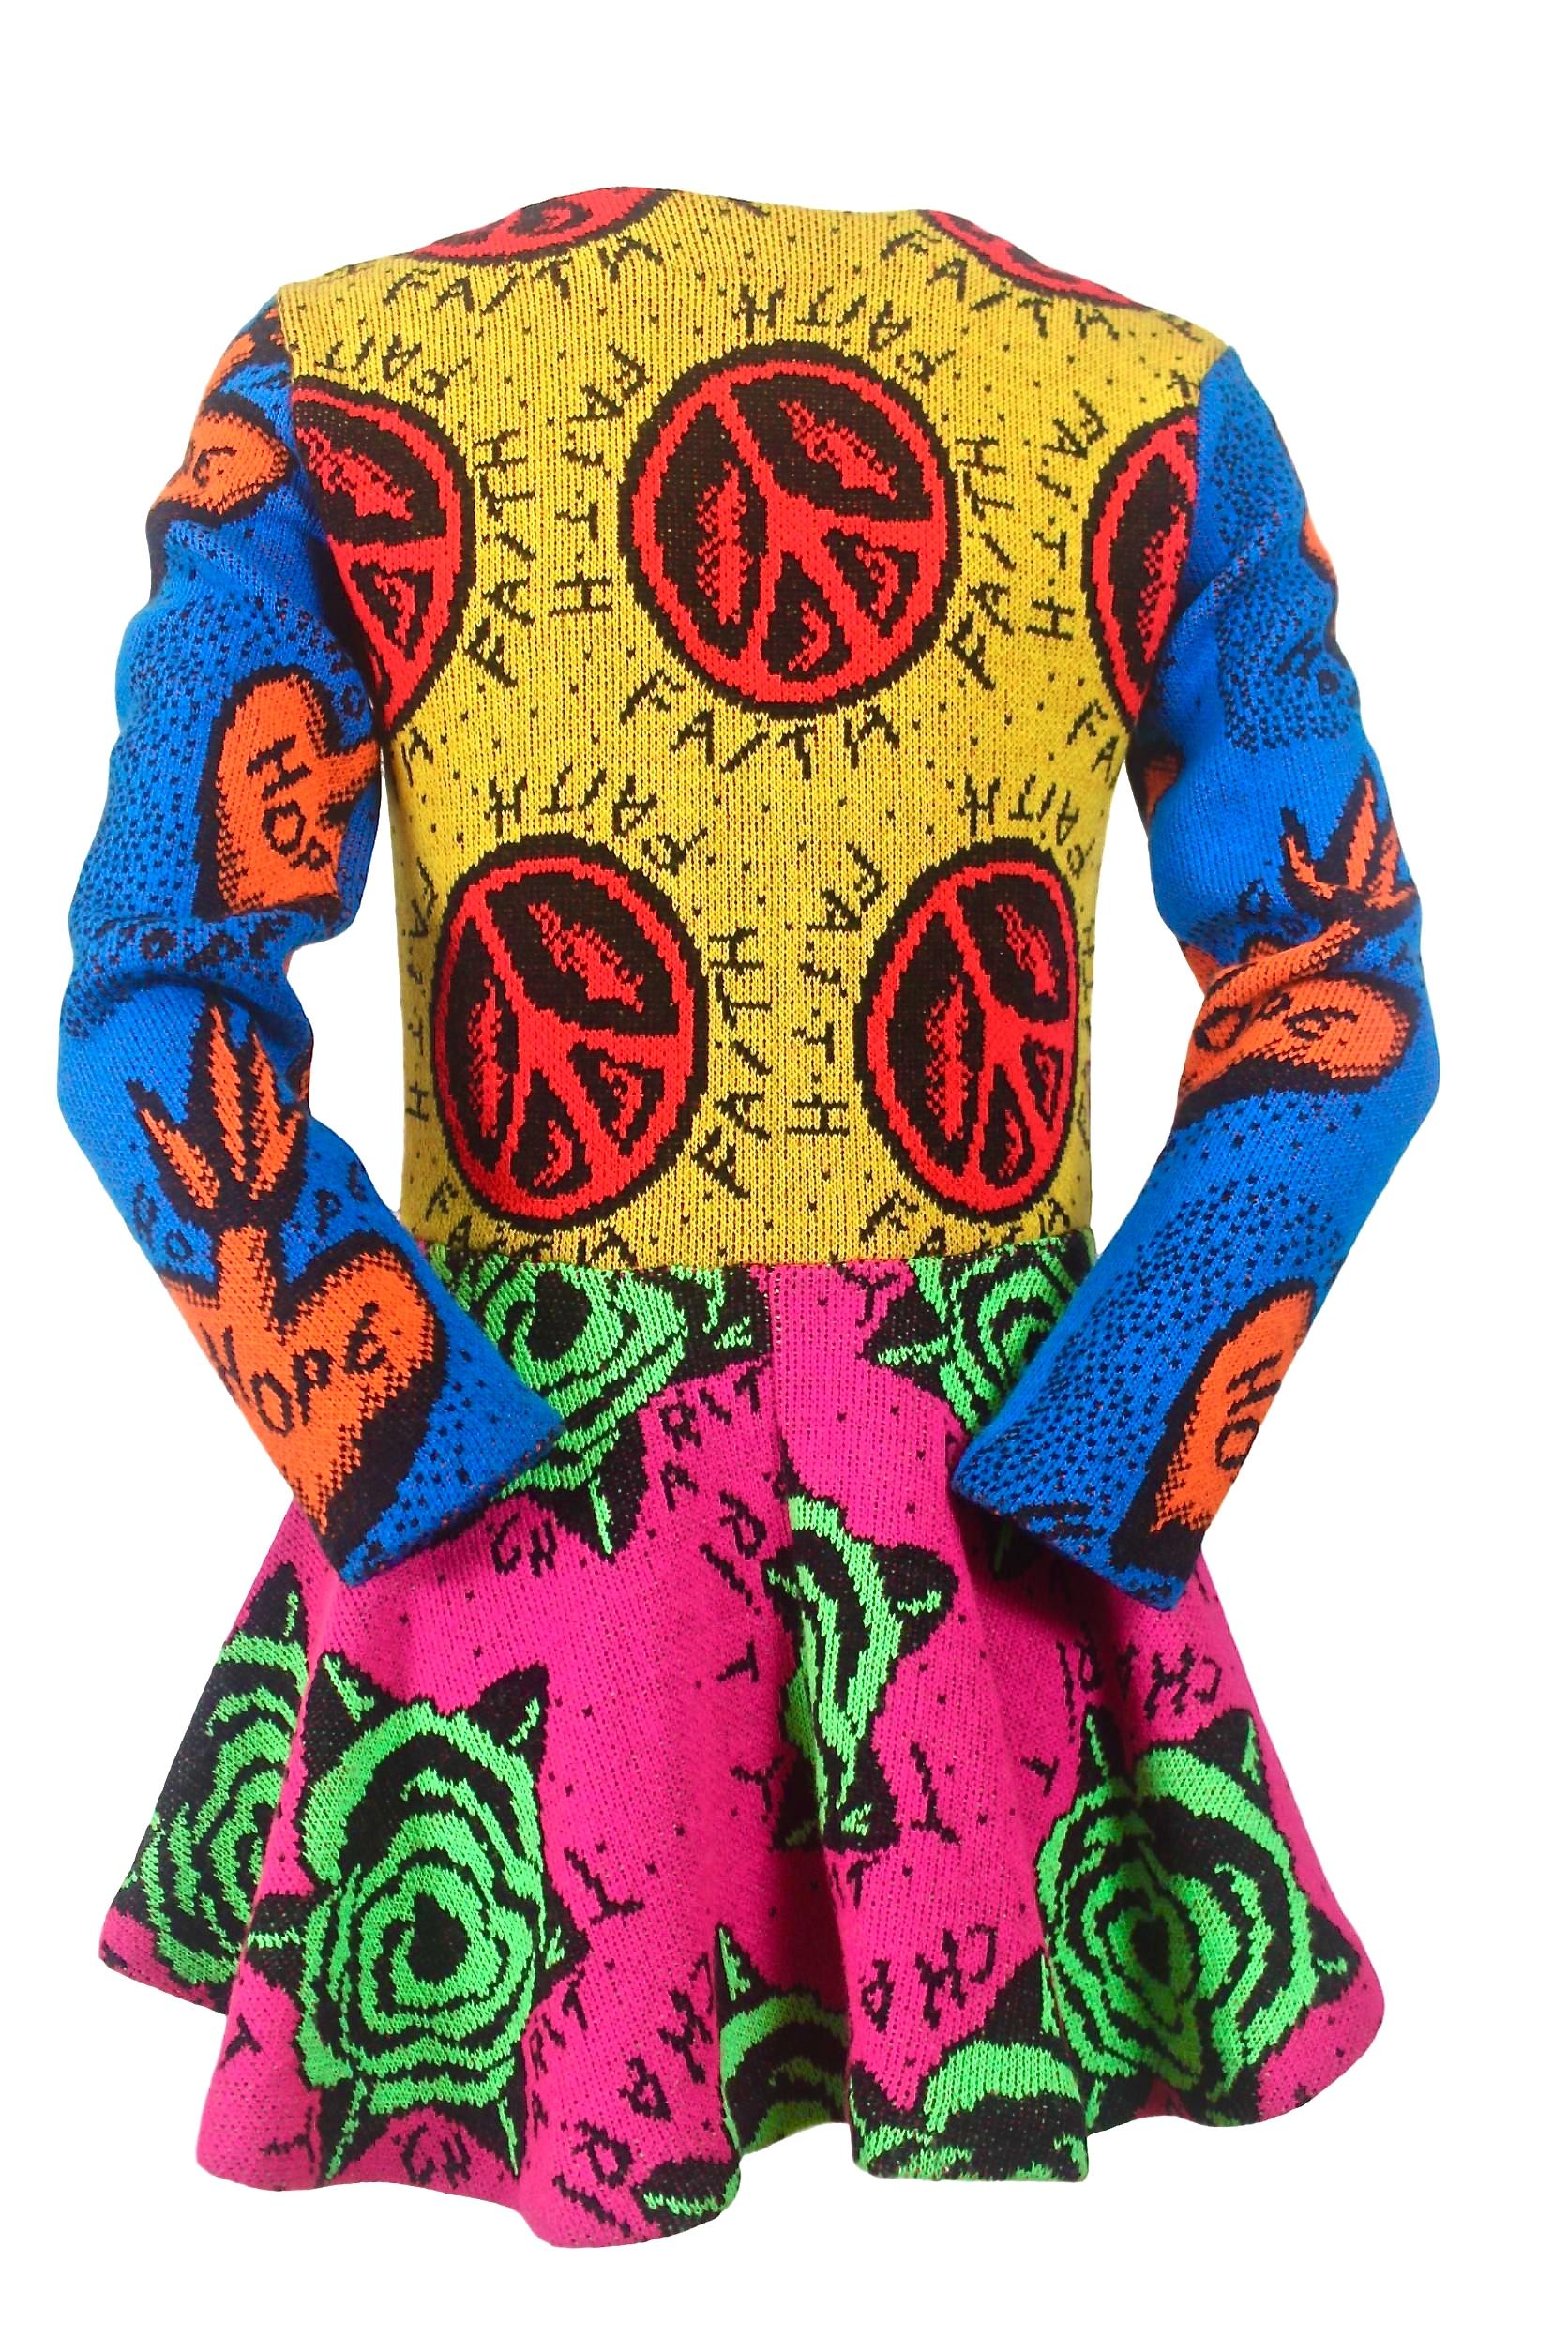 Betsey Johnson
Original Faith, Hope and Charity Knit
Peplum Jacket
Labelled size S